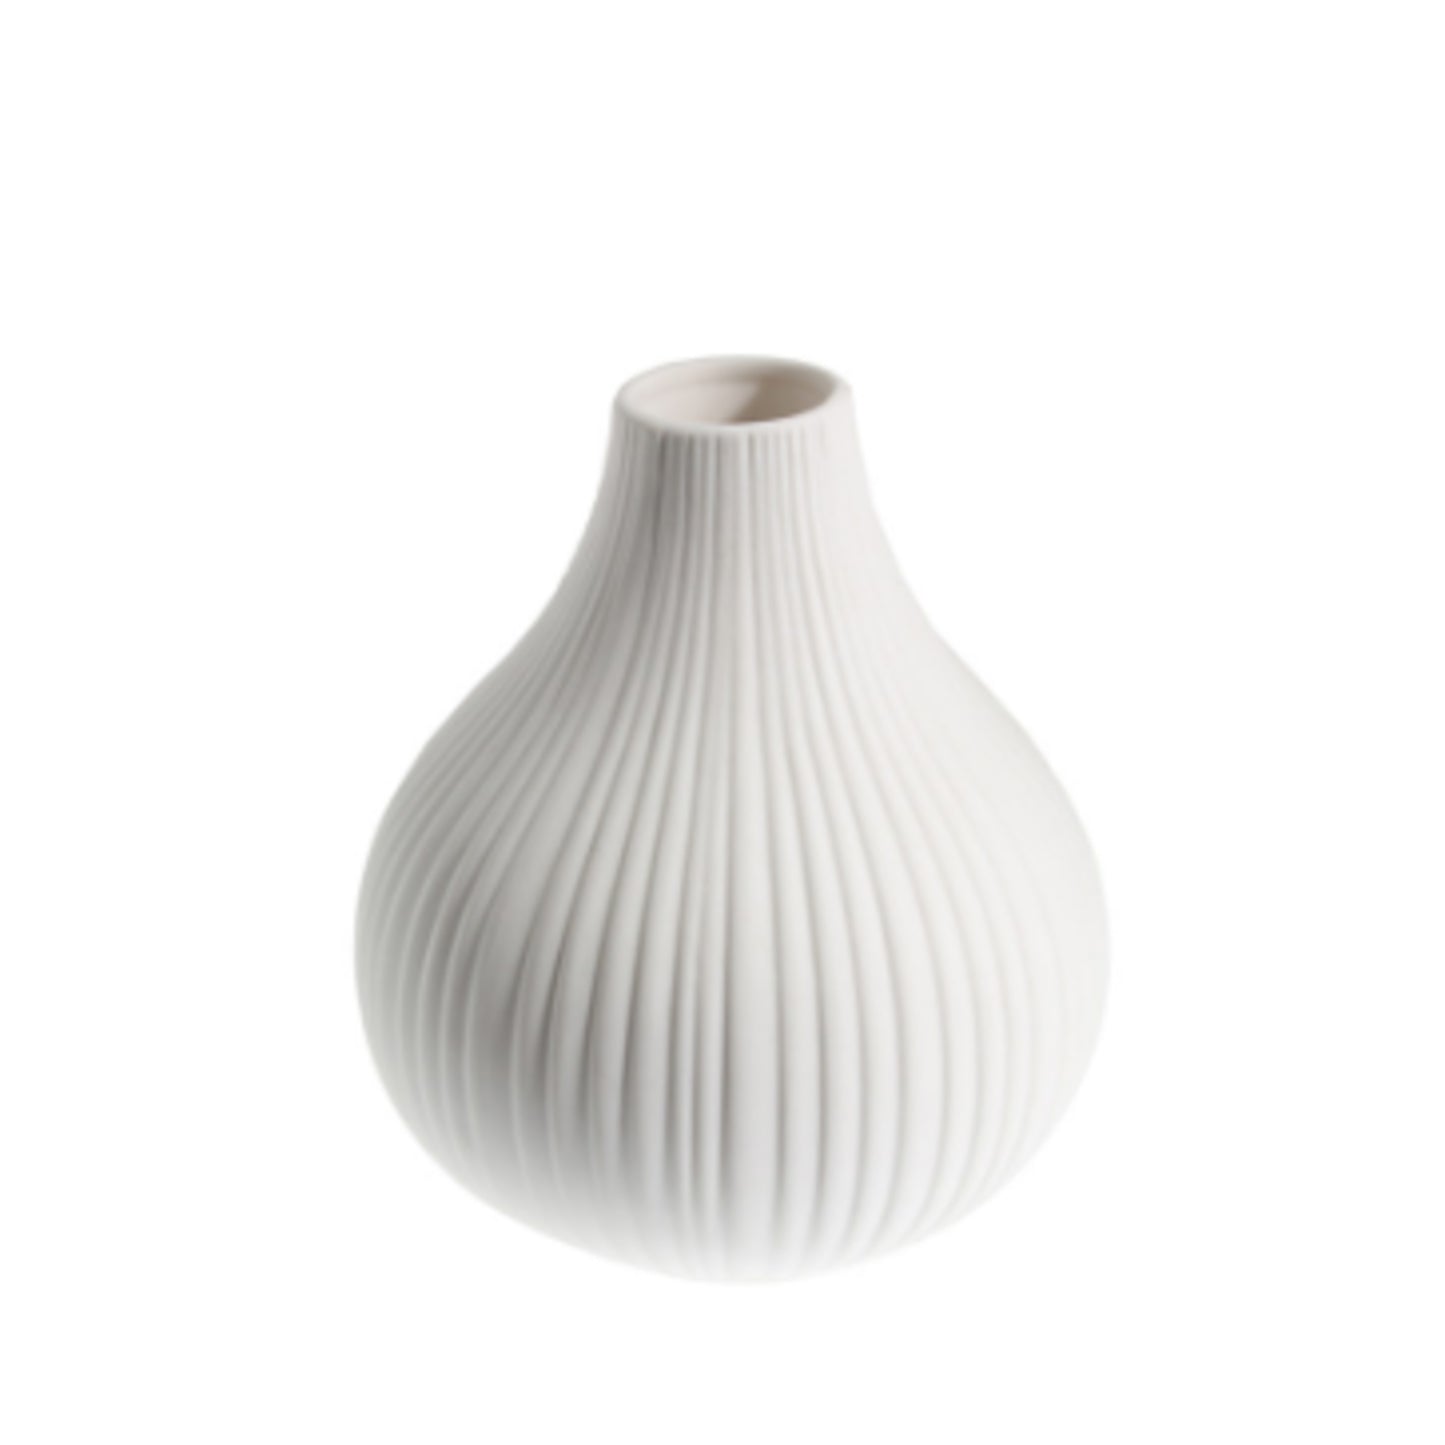 White Ceramic Small Bud Vase 7cm